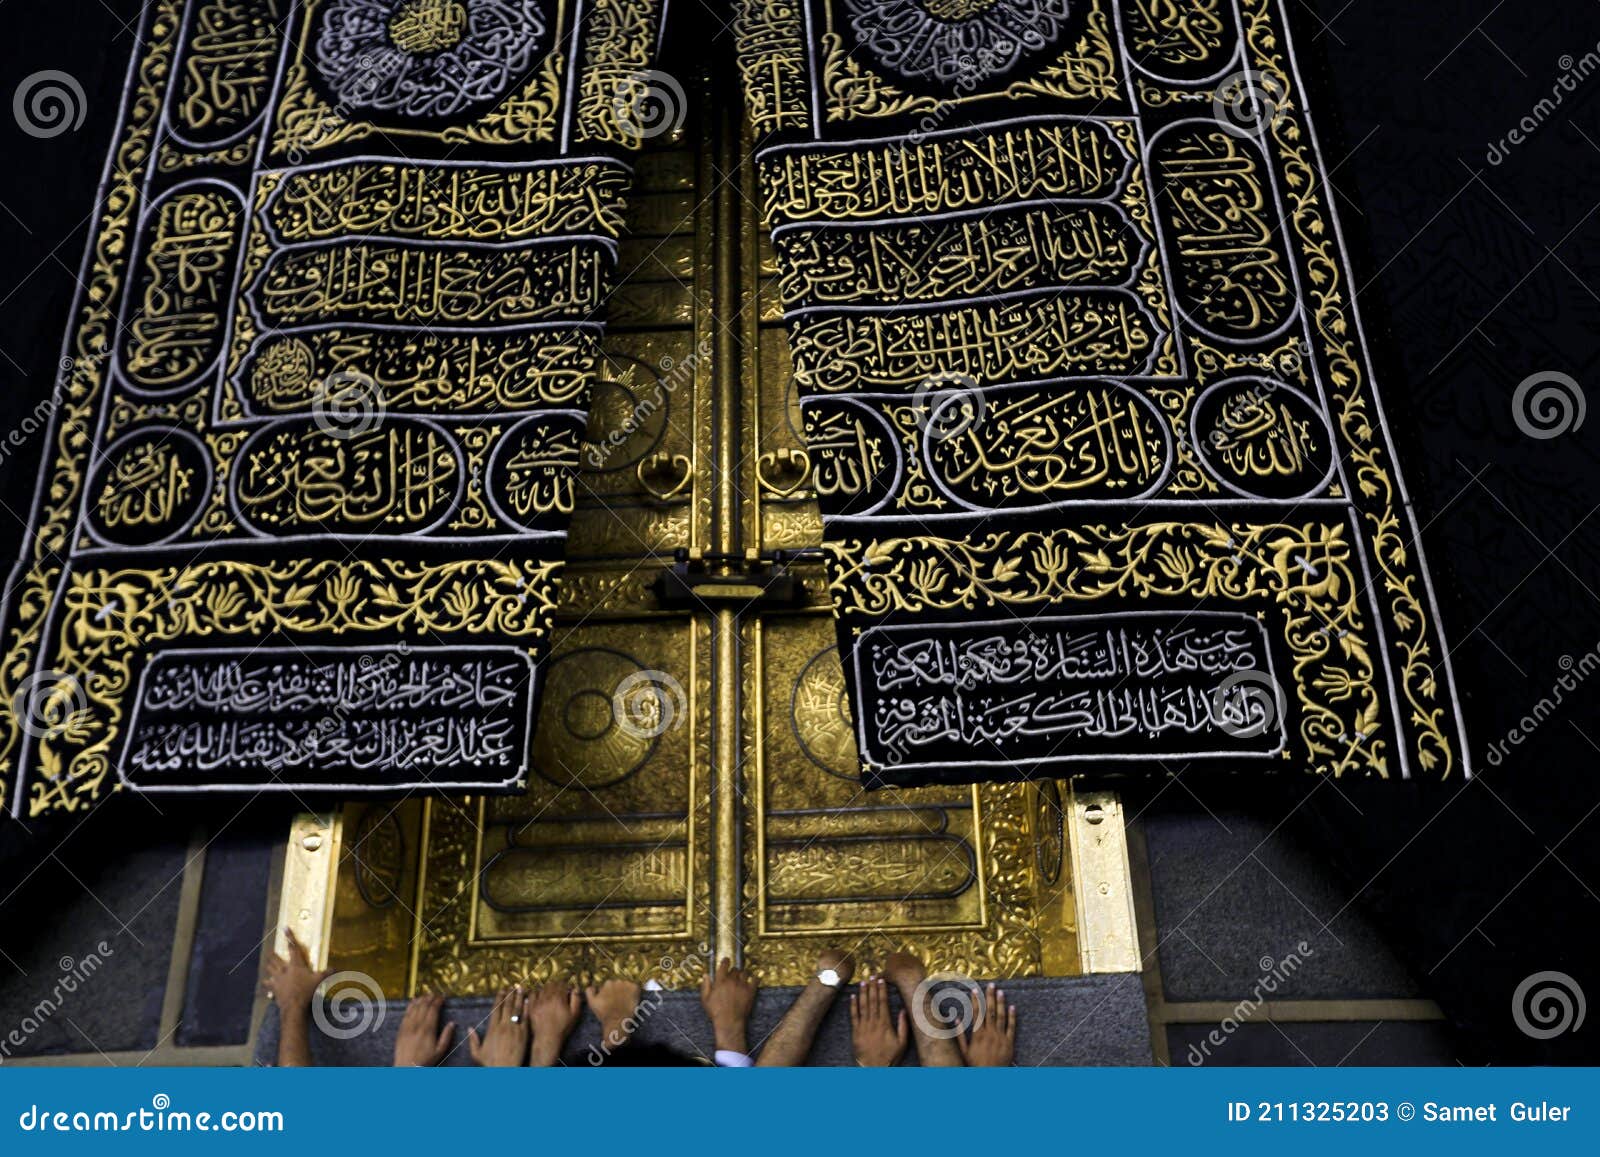 the golden doors of the holy kaaba closeup,